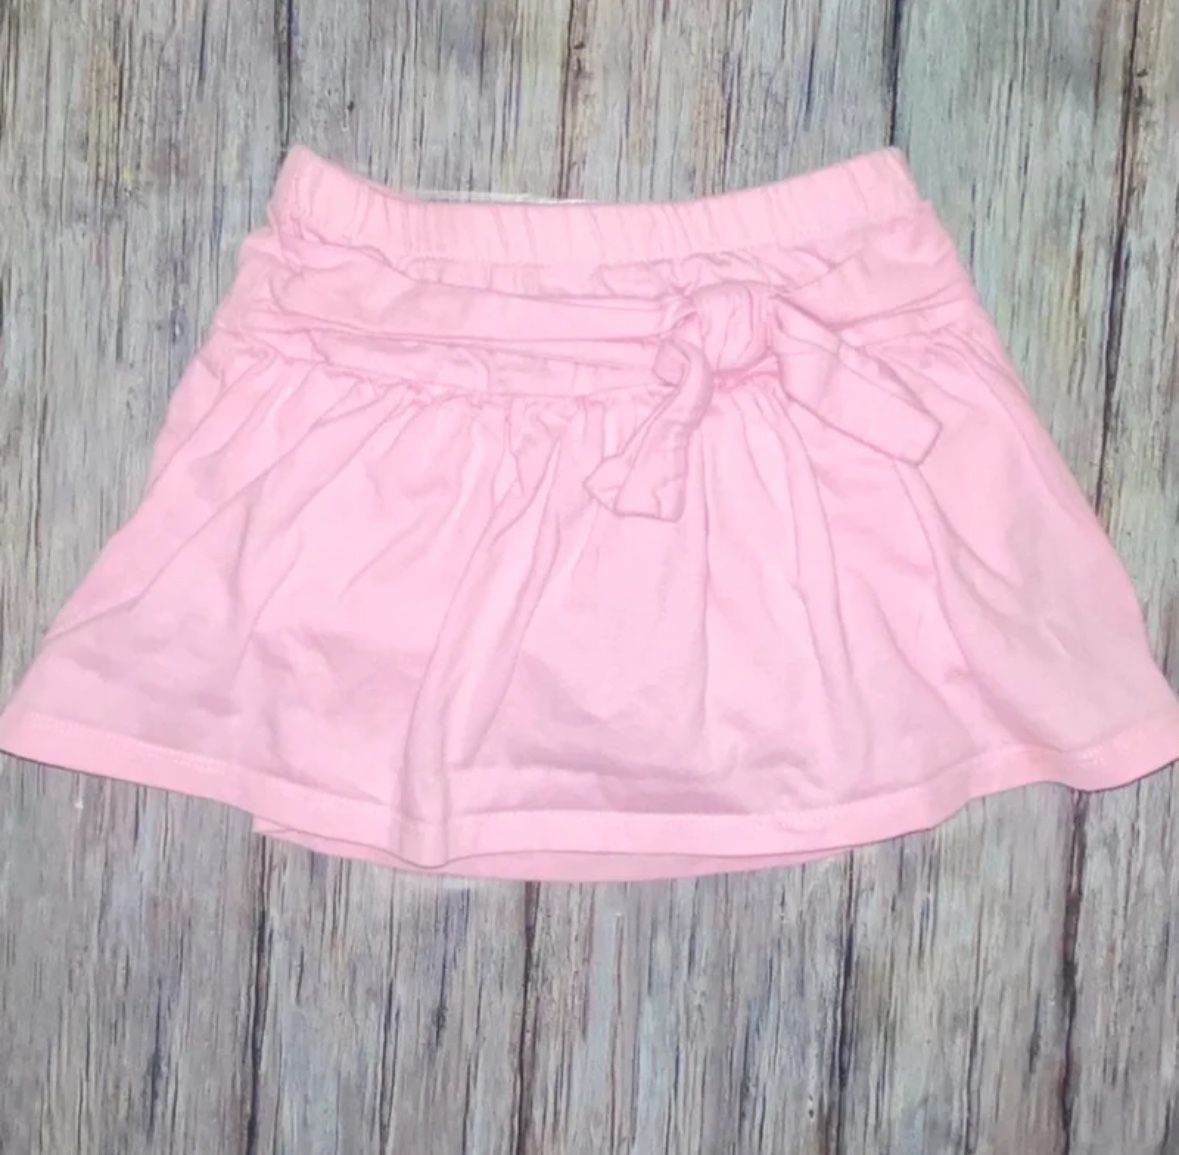 Toddler Girls 3T Pink Skort Skirt with Bow